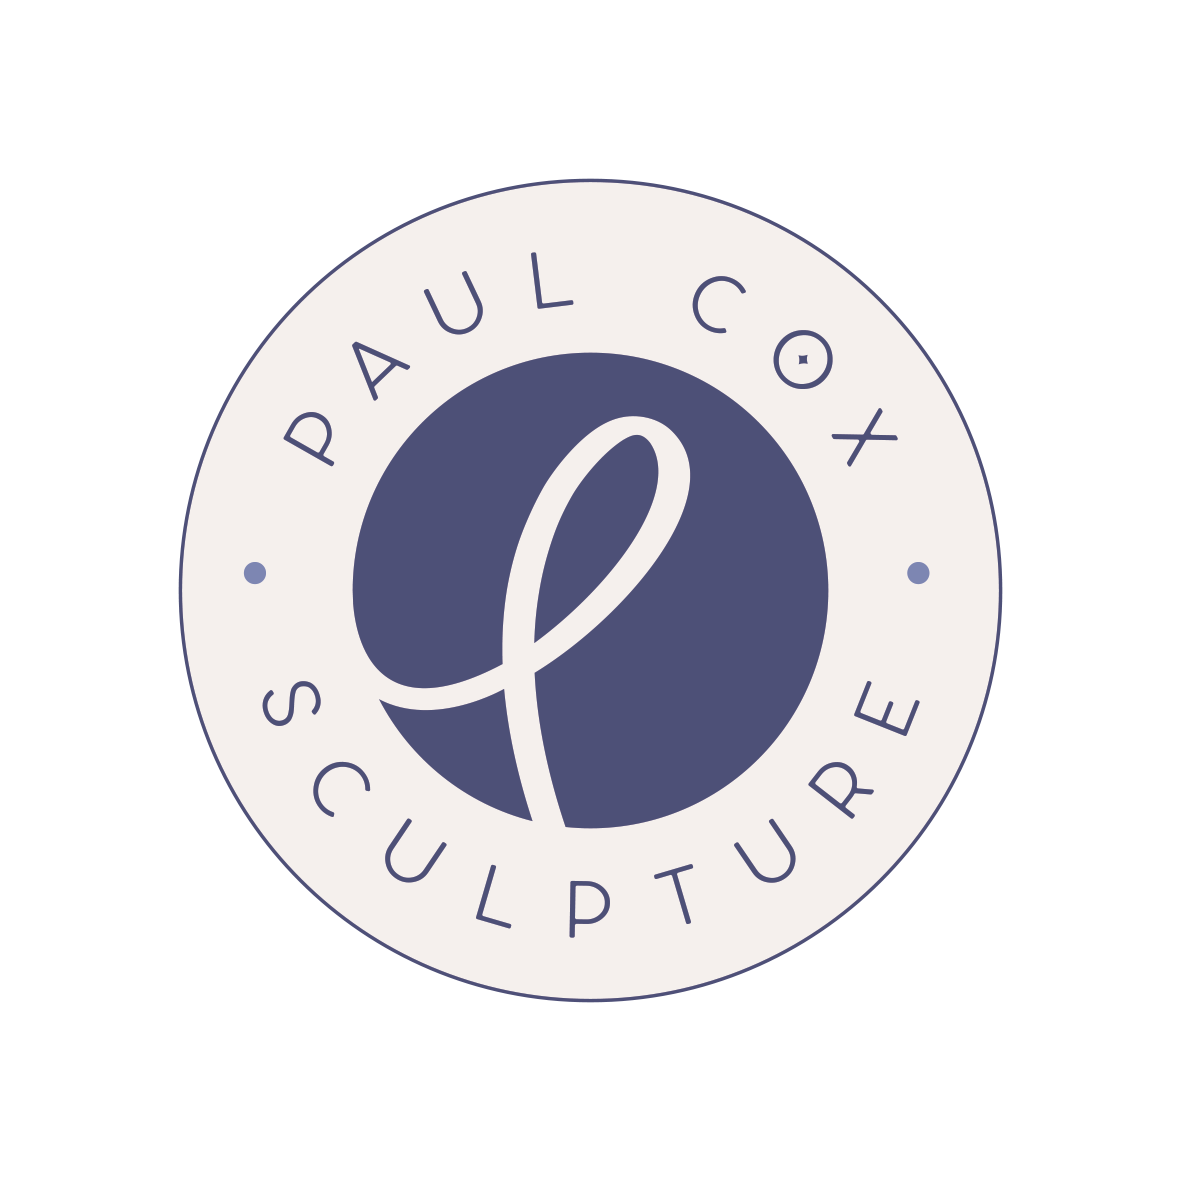 Paul Cox Sculpture